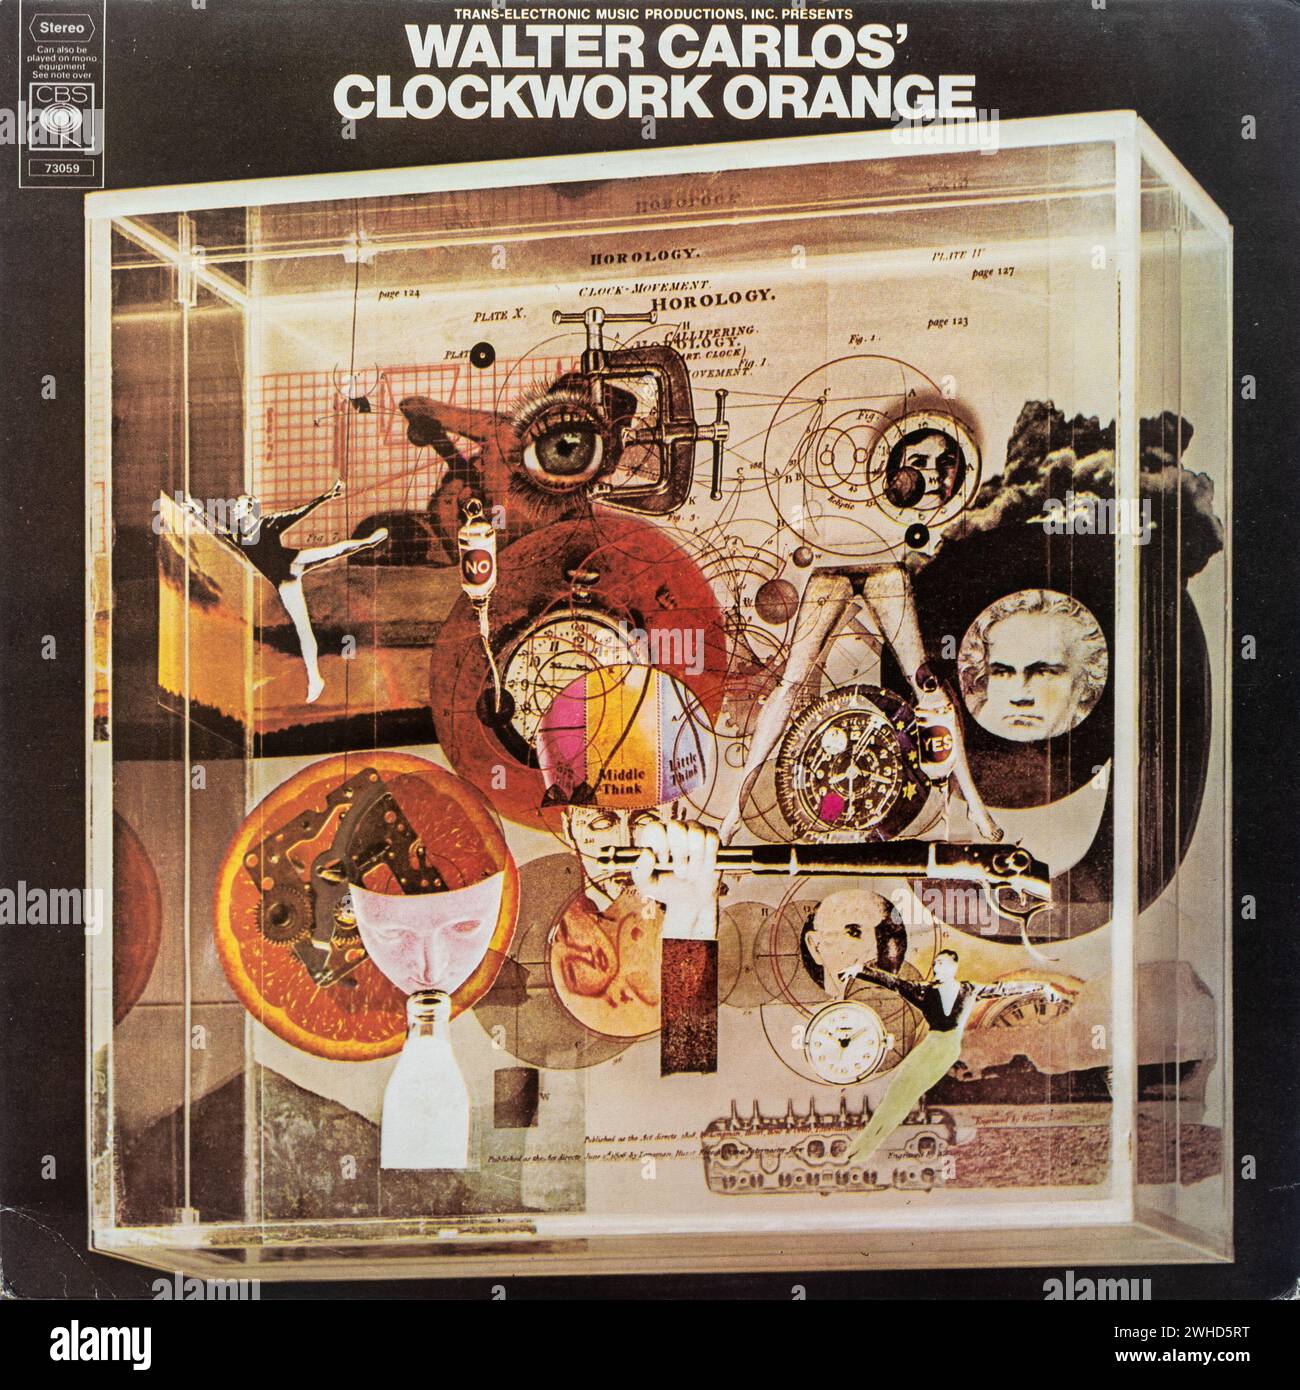 Walter Carlos Clockwork Orange copertina album in vinile (wendy carlos) Foto Stock